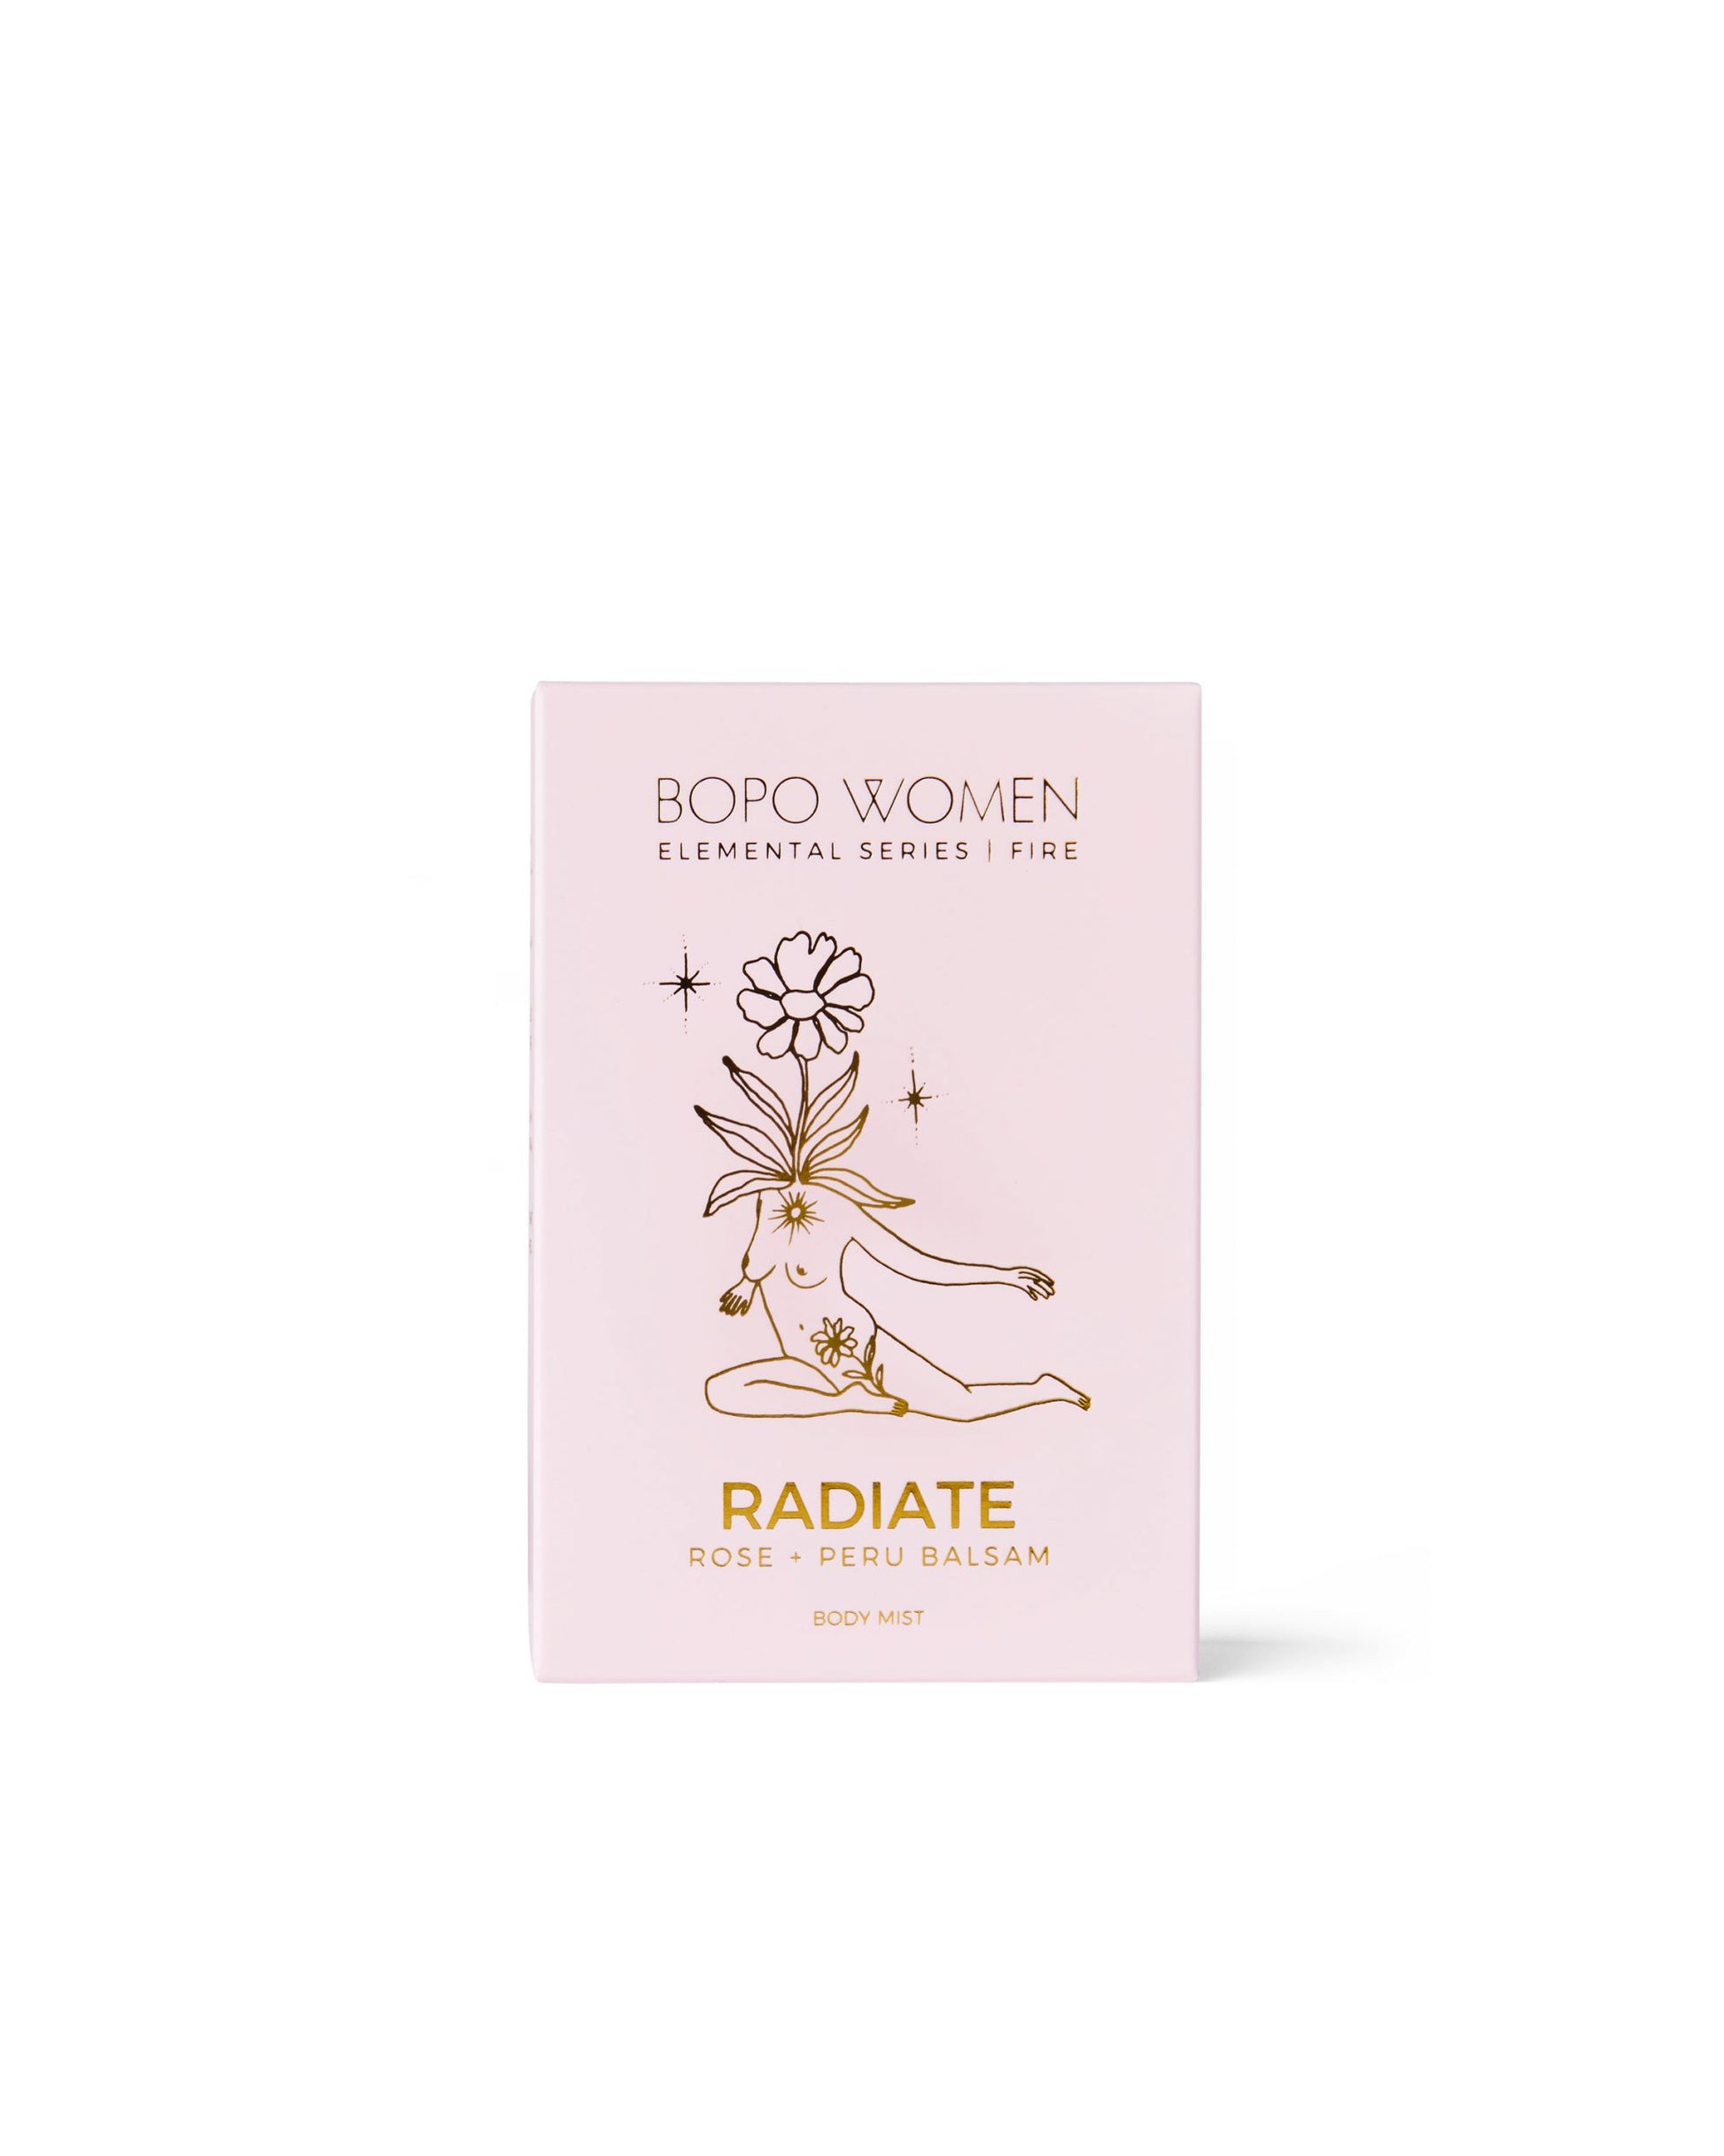 Bopo Women - Radiate  Body Mist | The Ivy Plant Studio | Bopo women | Body mists | perfume 